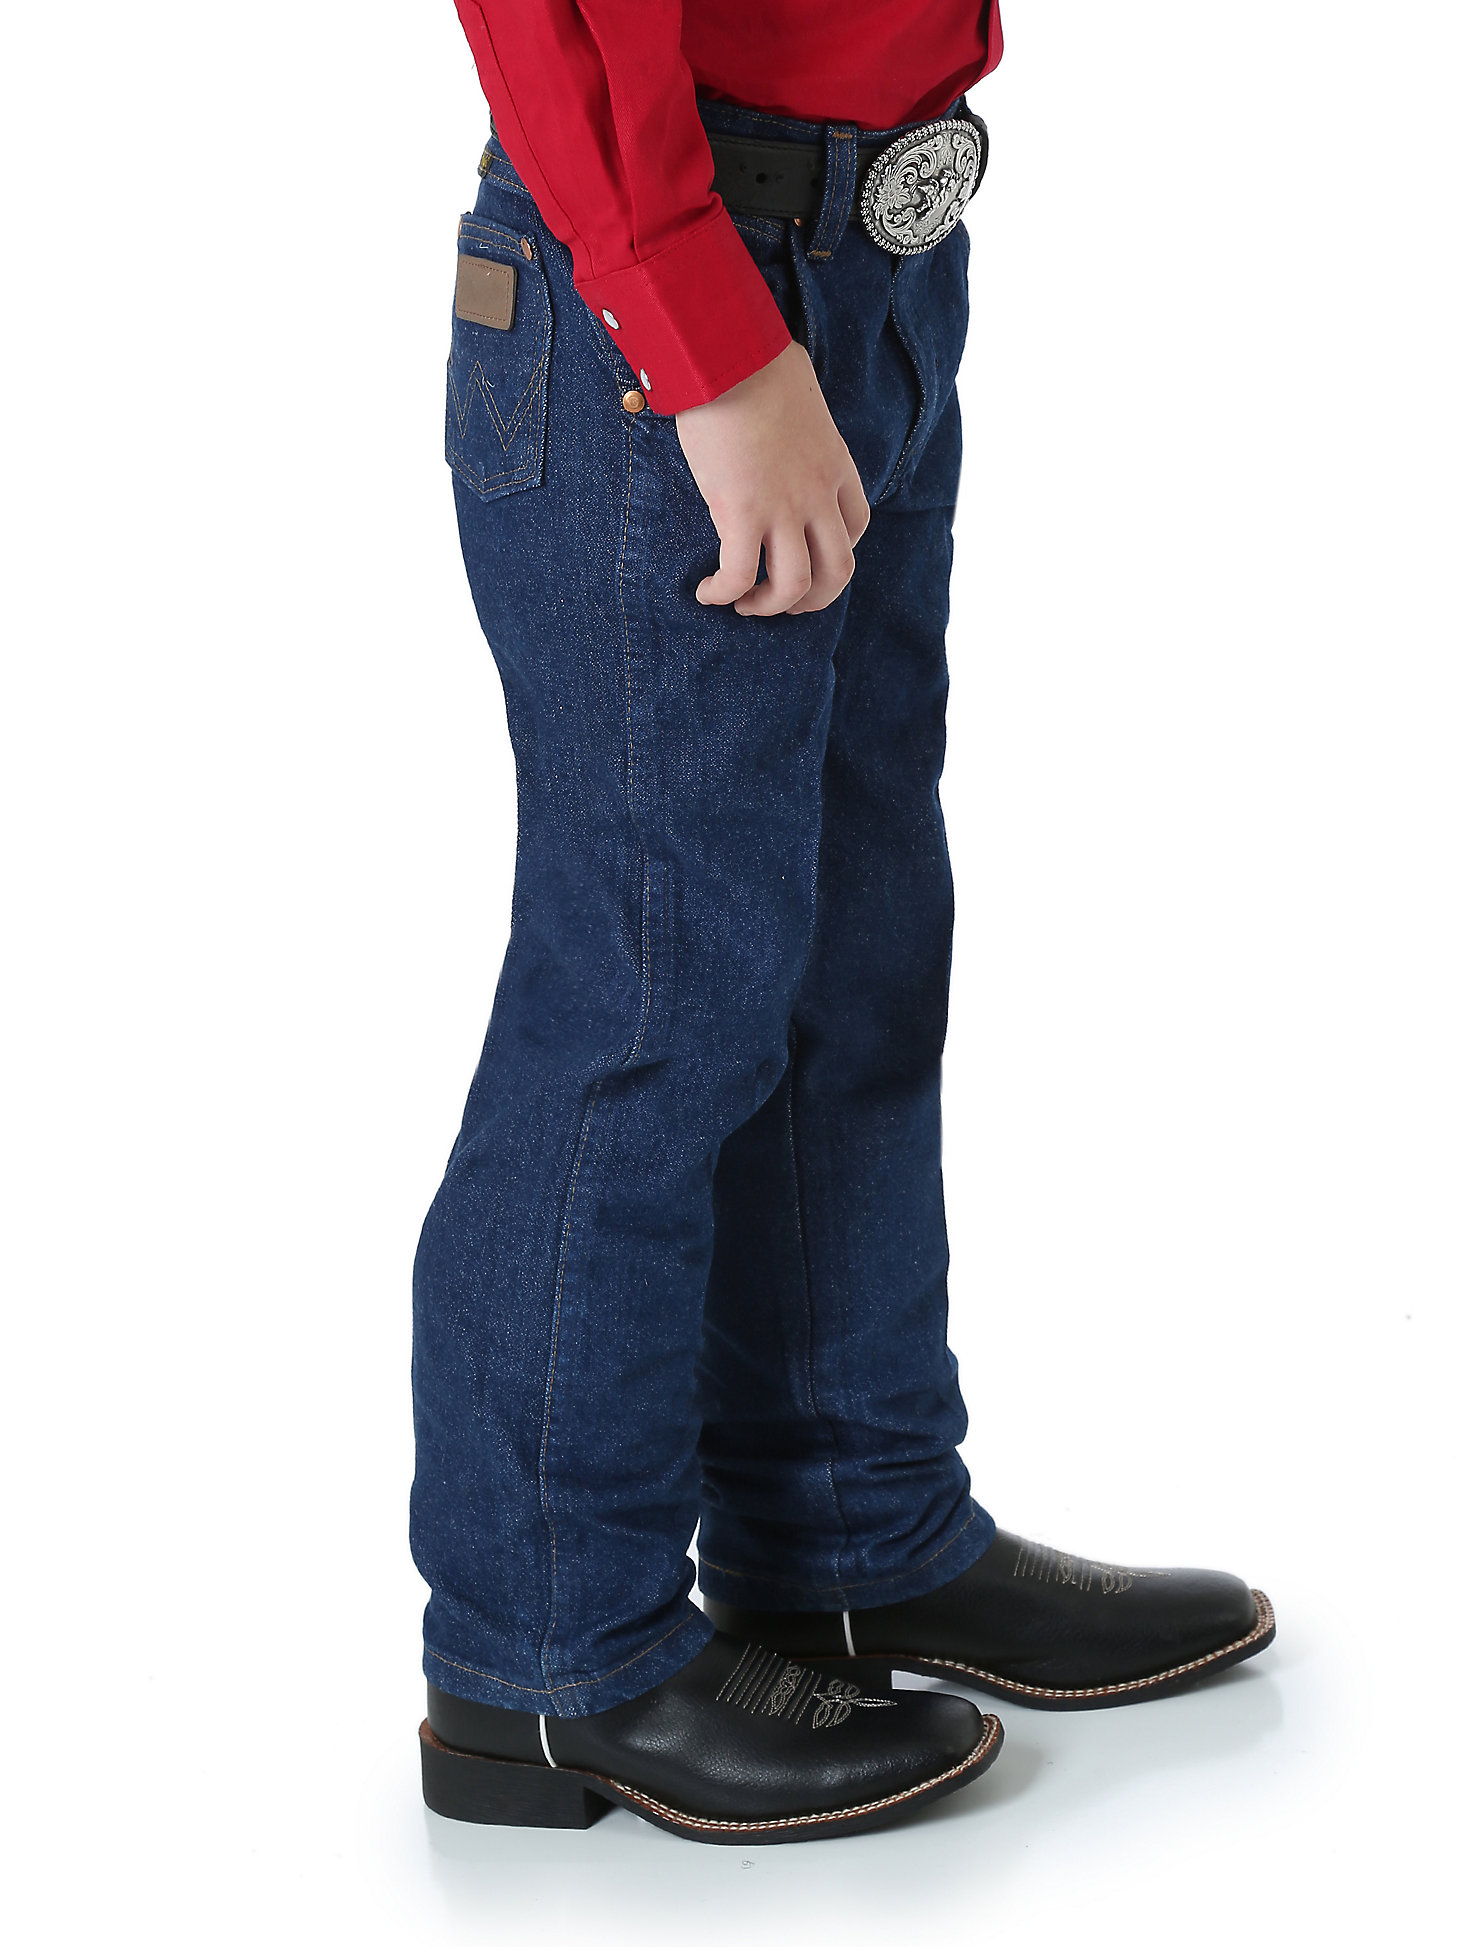 1-7 Boy's Cowboy Cut Regular Fit Jean Wrangler Toddler 13MWJSW